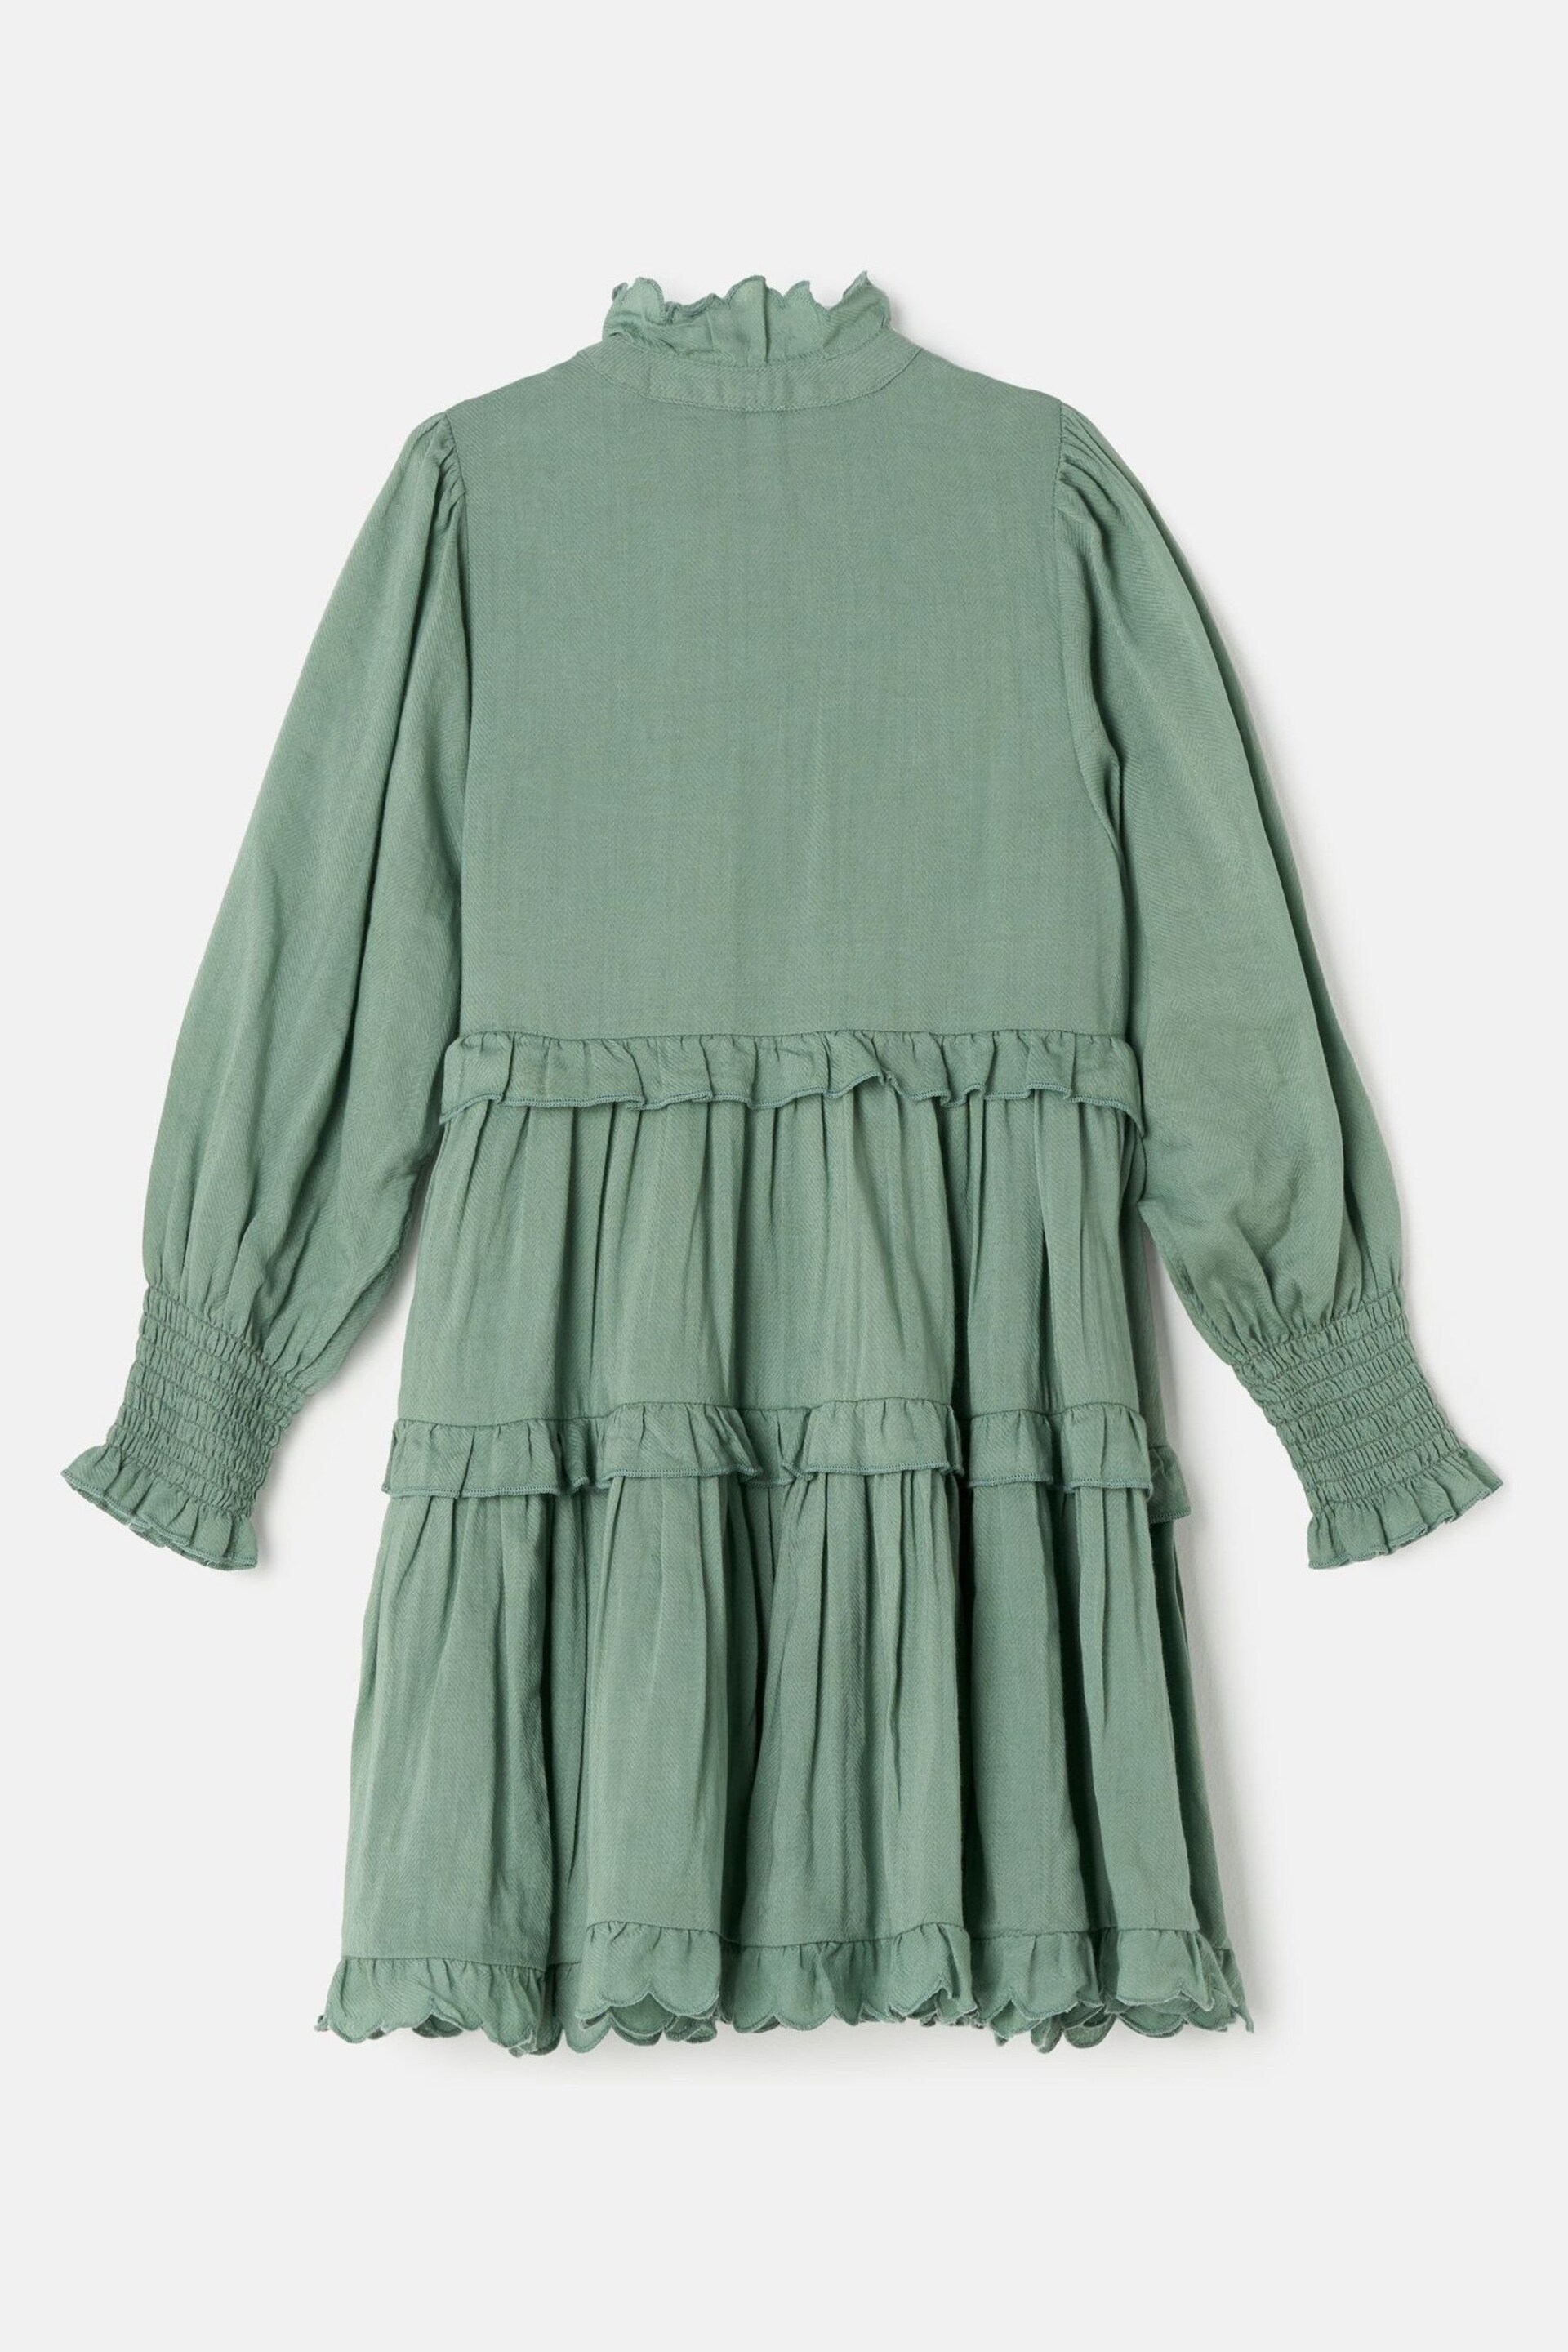 Angel & Rocket Green Cordelia Vintage Frill Long Sleeve Dress - Image 4 of 5